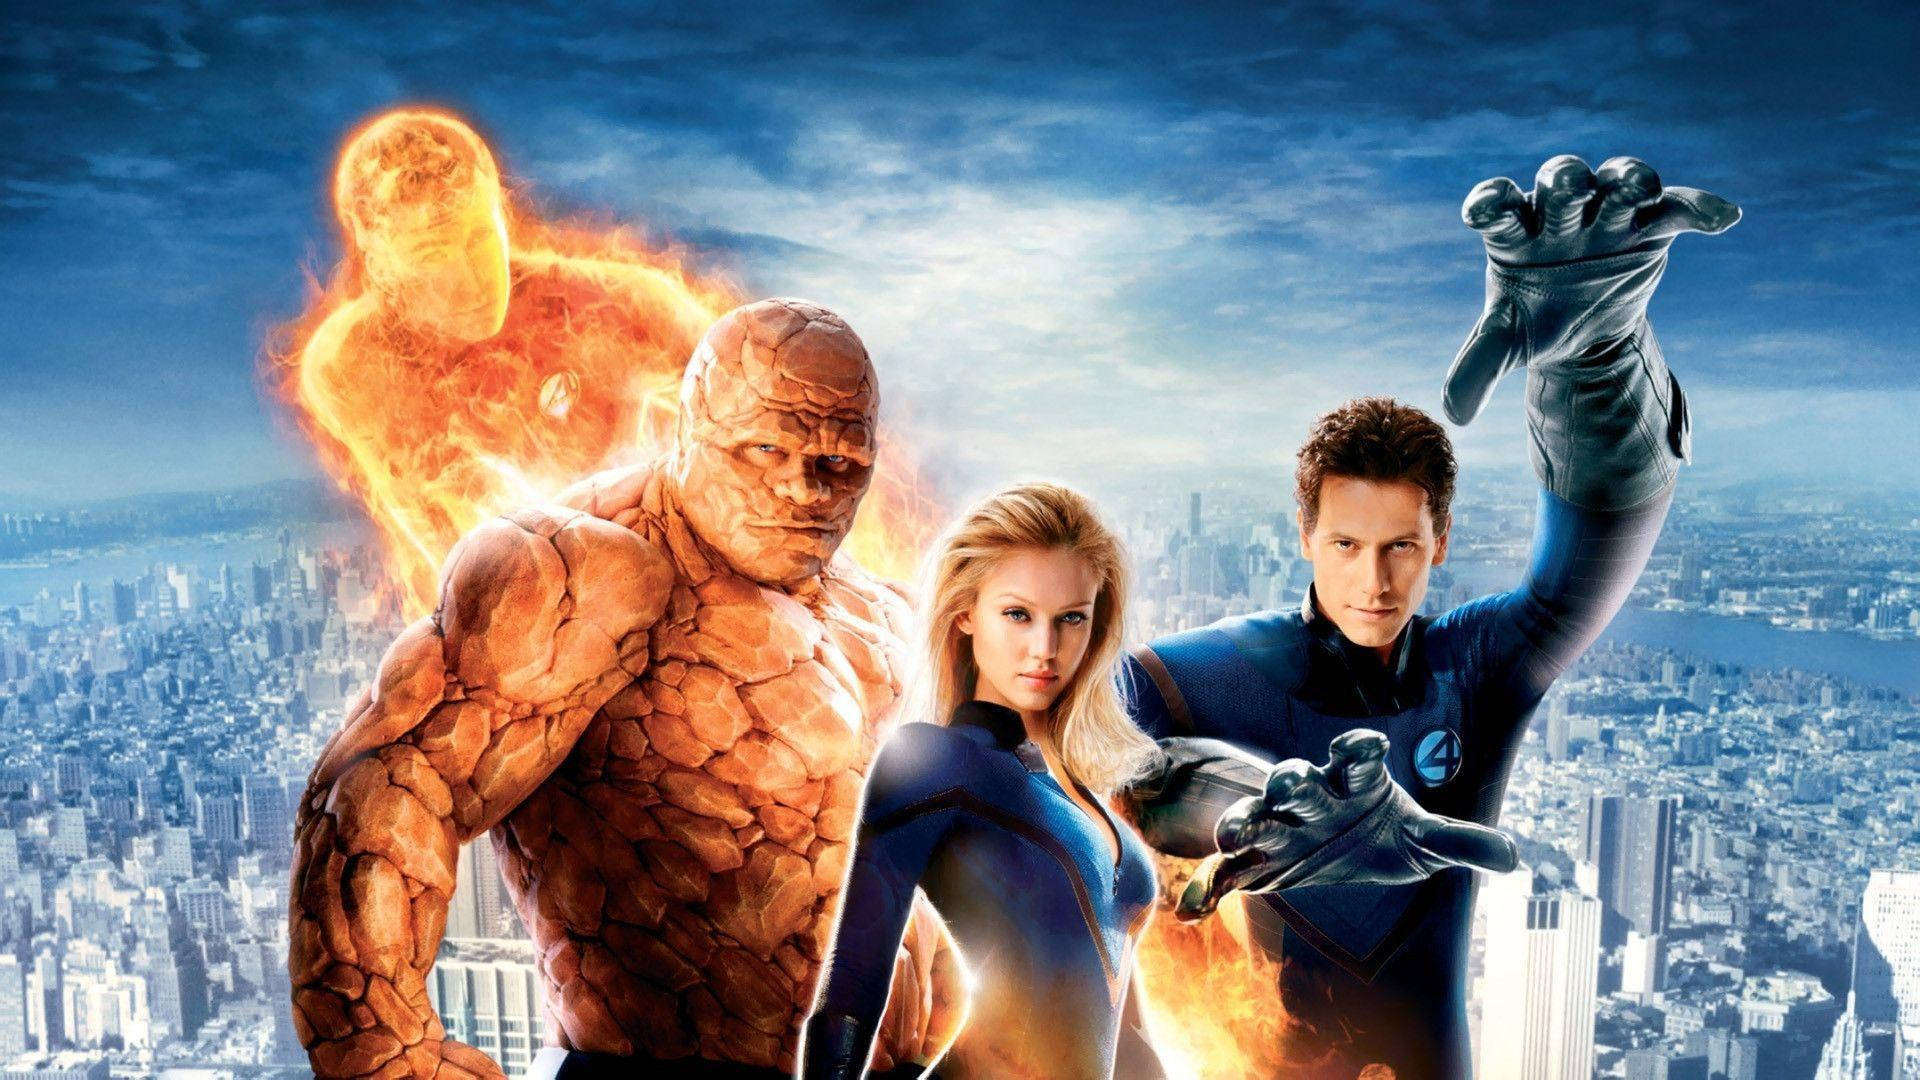 Fantastic Four 2005 Superheroes Background